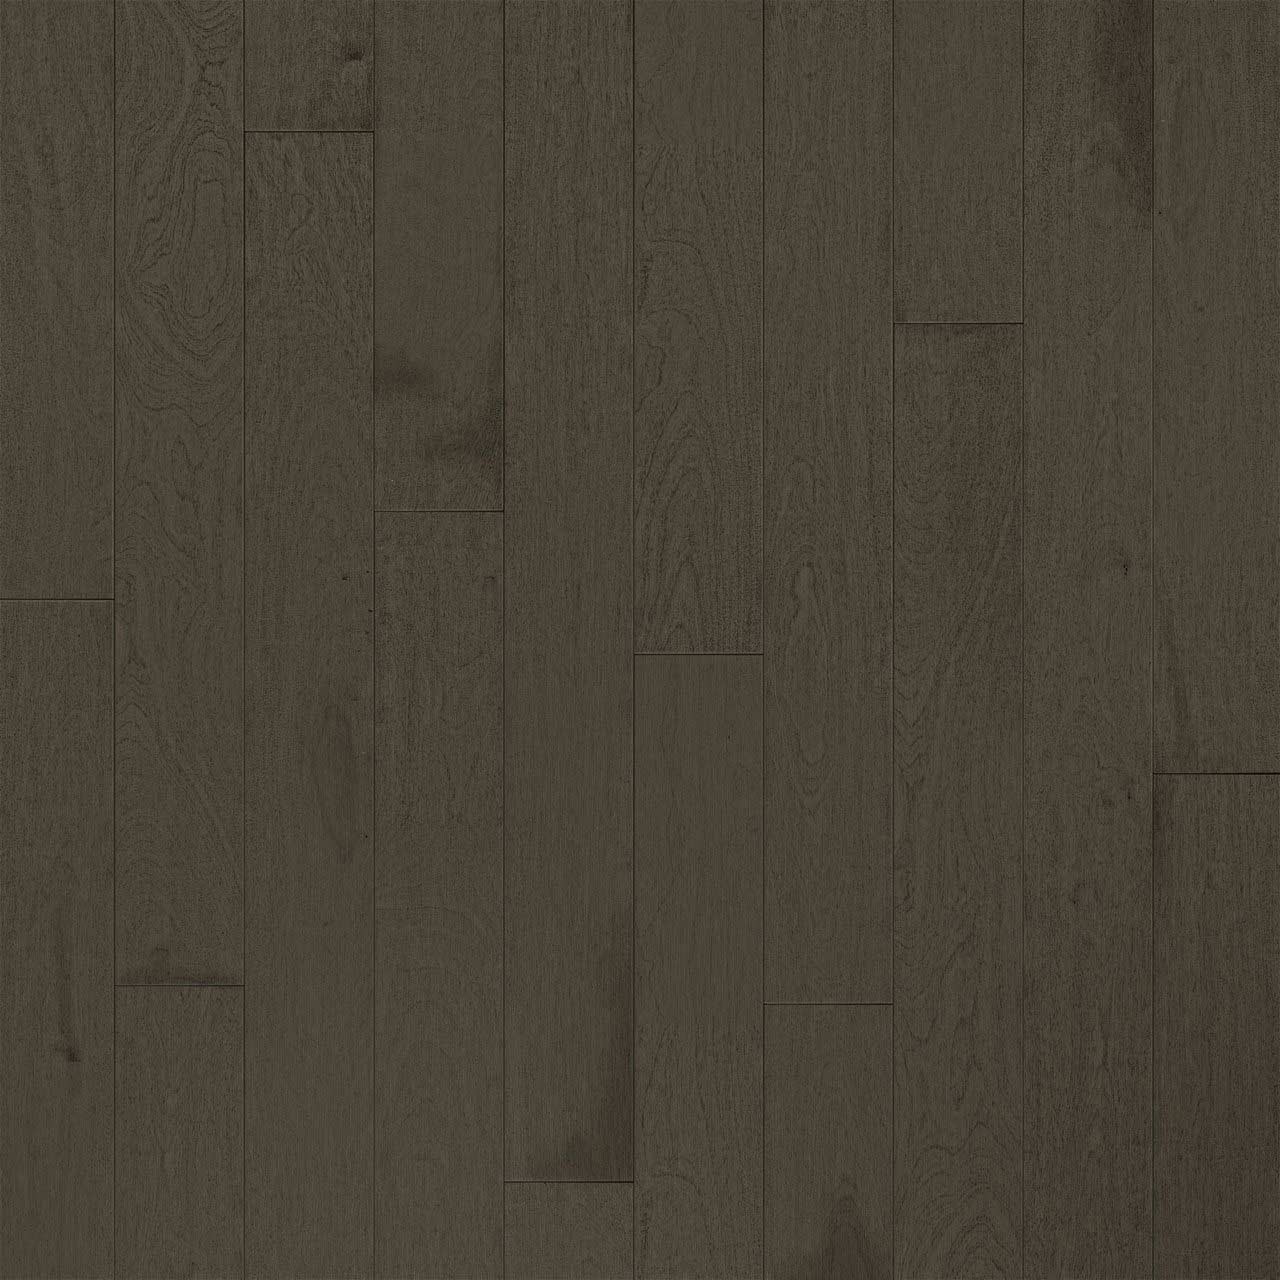 Hardwood SolidGenius & Engenius Yellow Birch Sample 2